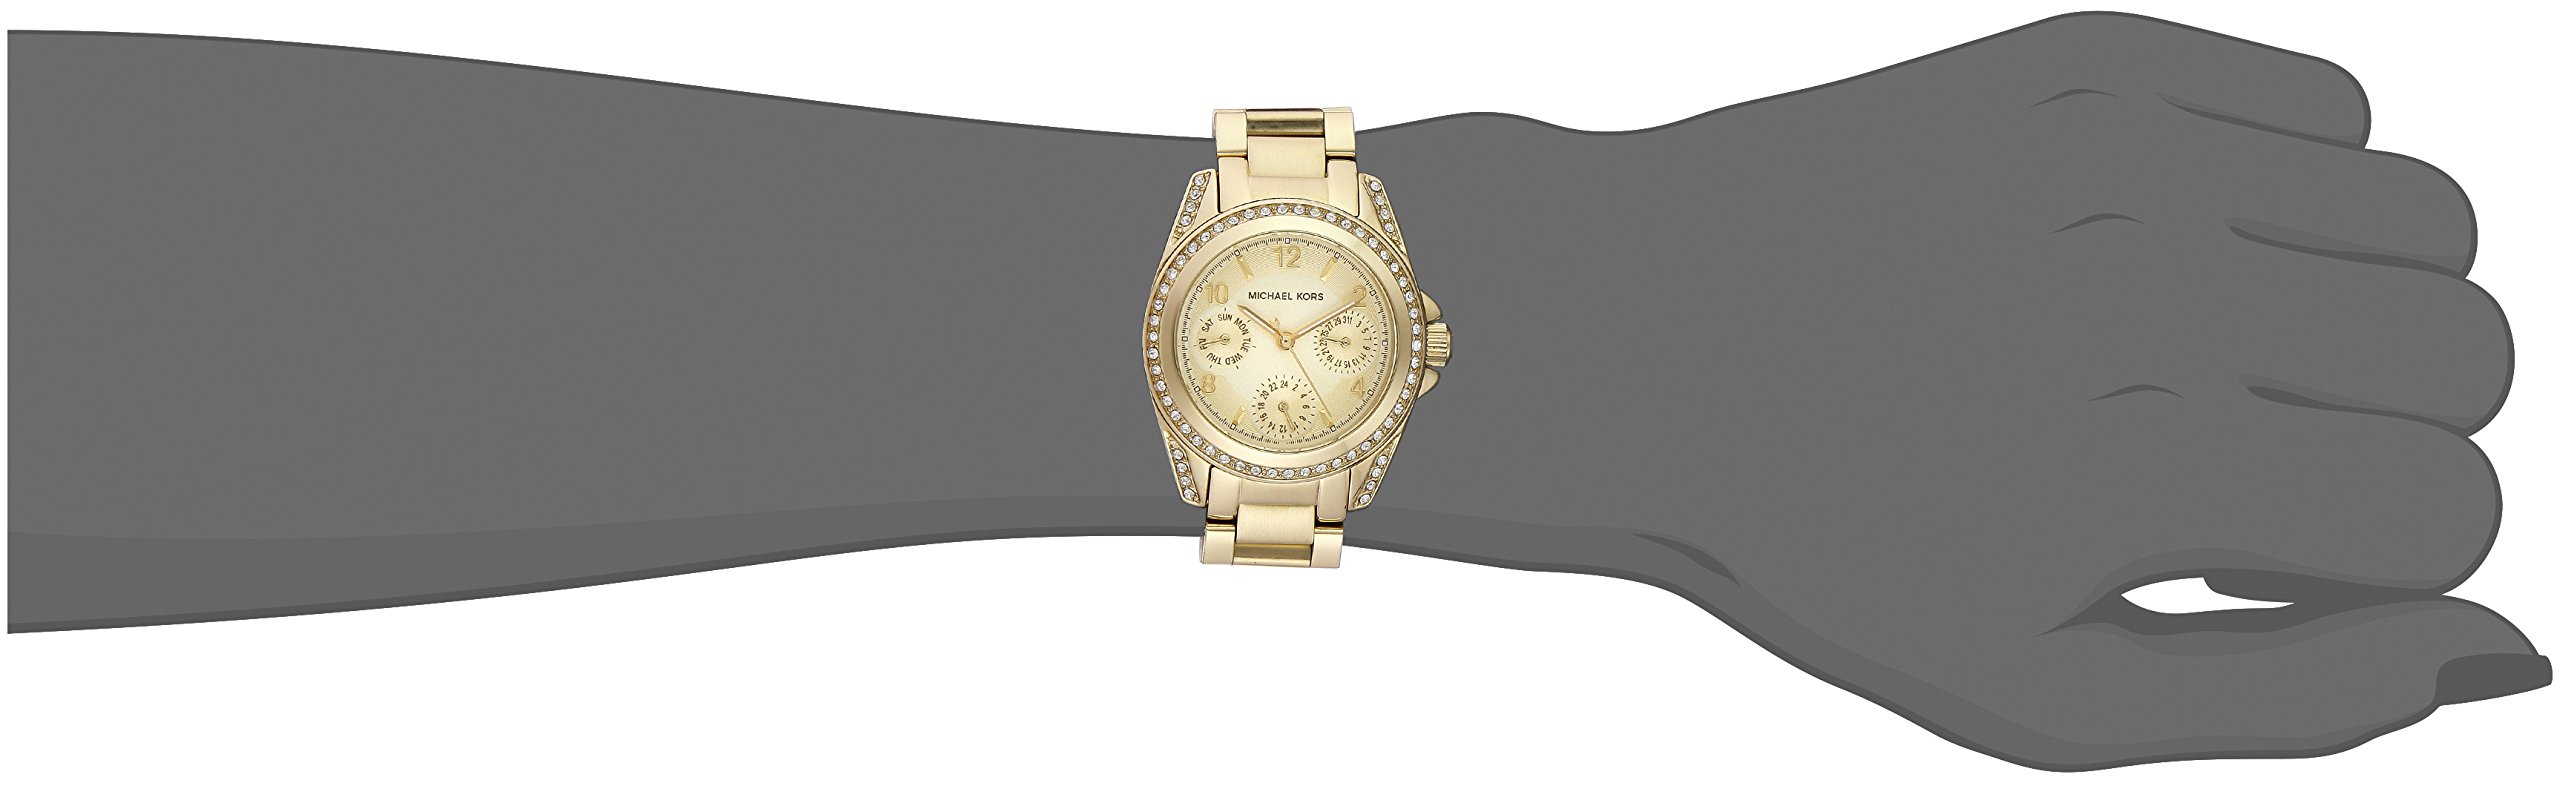 Michael Kors Women's Blair Gold-Tone Watch MK5639